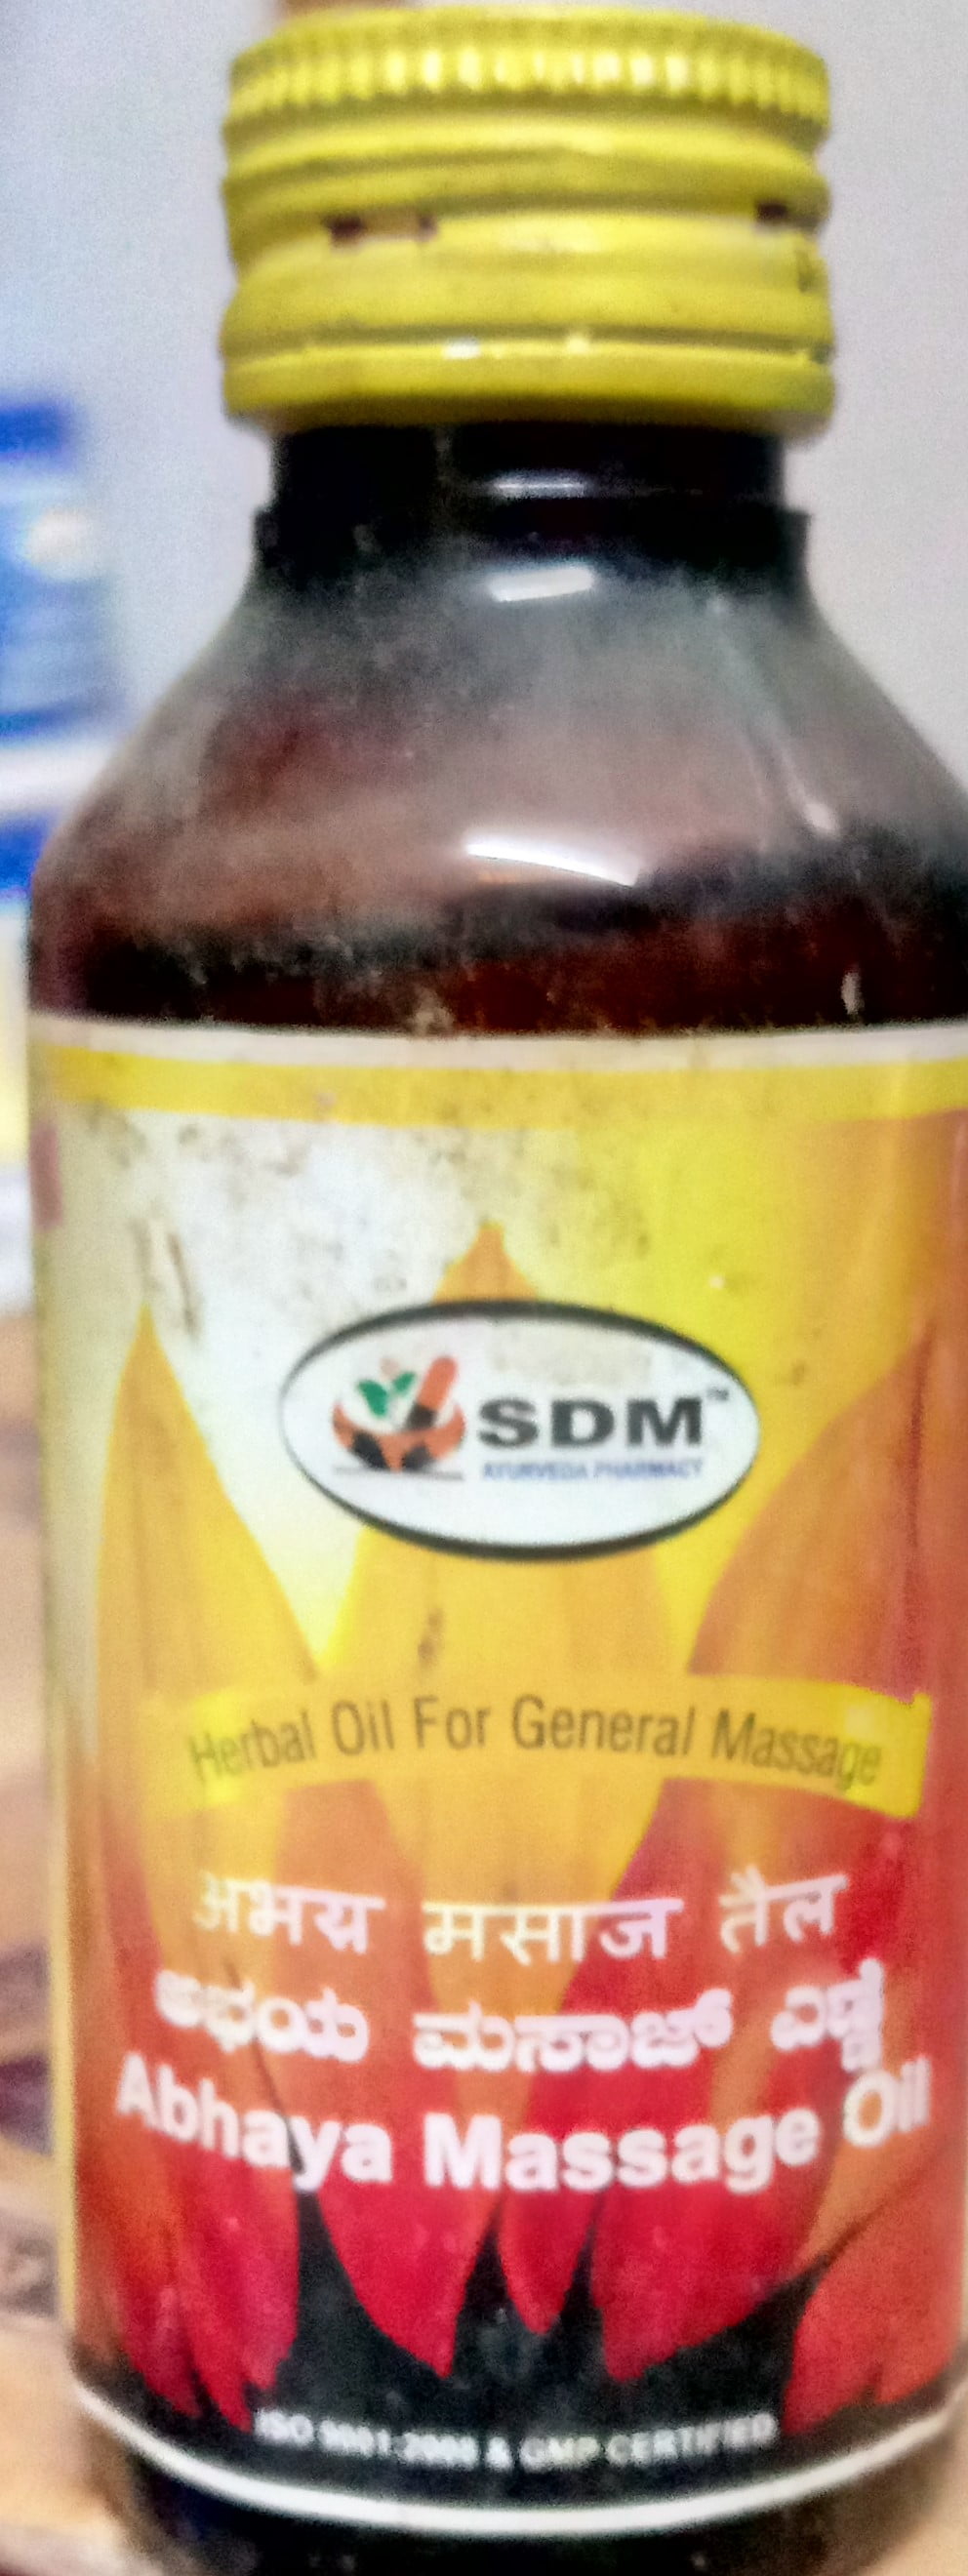 abhaya massage oil 200ml upto 15% off sdm ayurveda